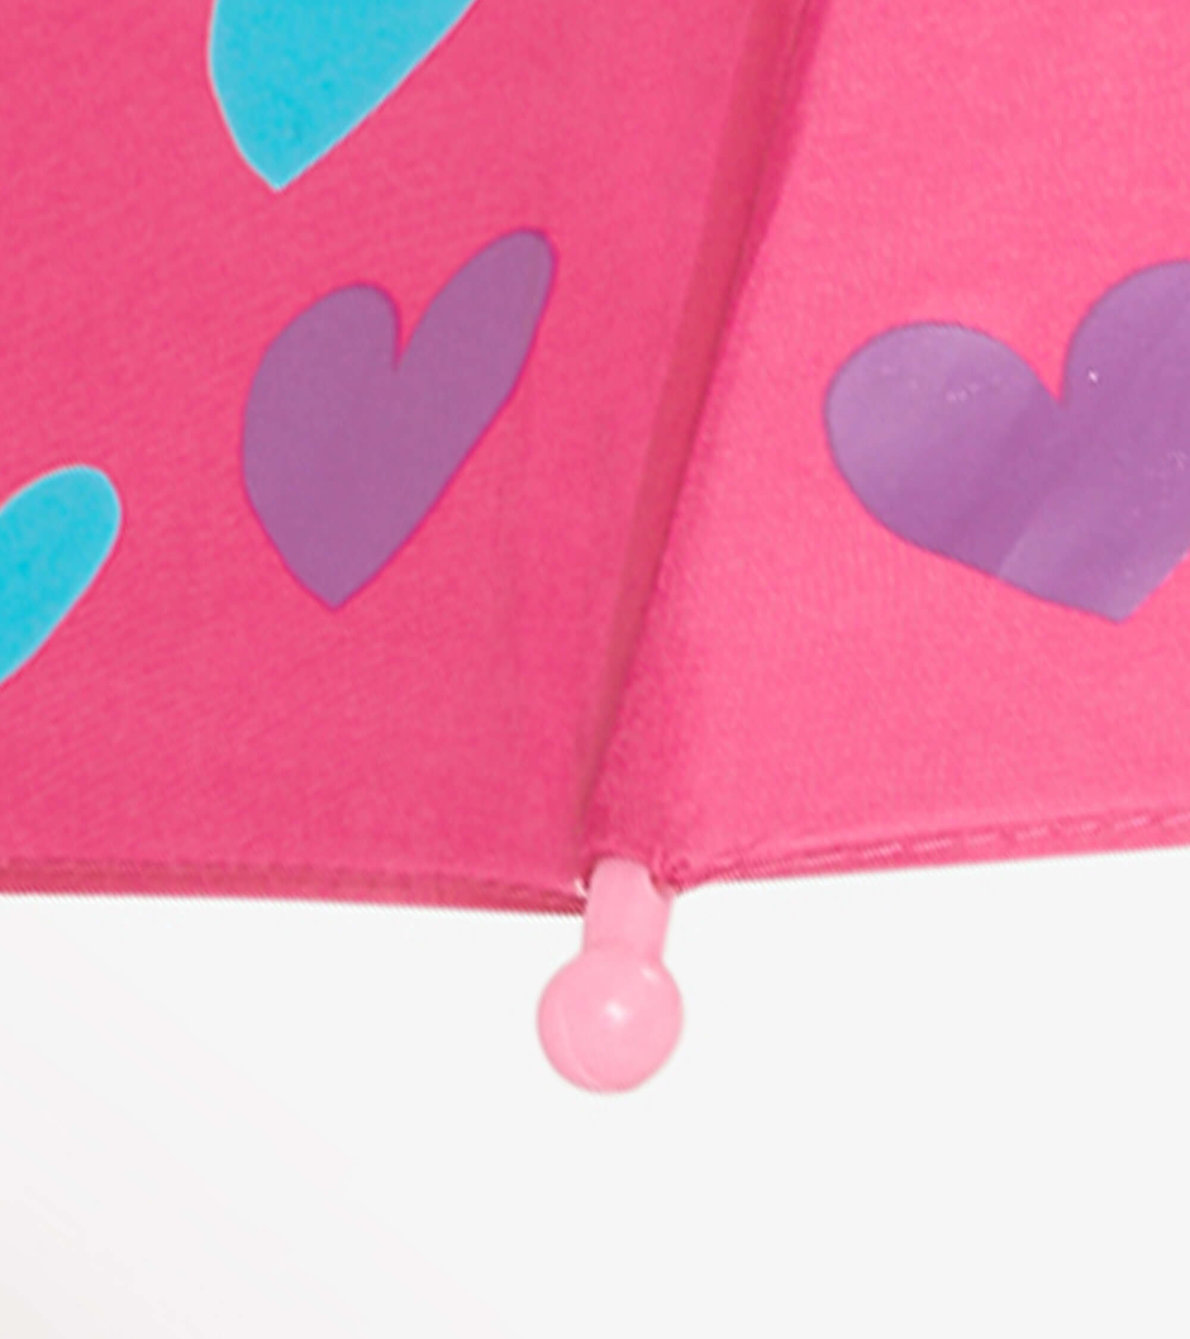 View larger image of Fun Hearts Kids Umbrella